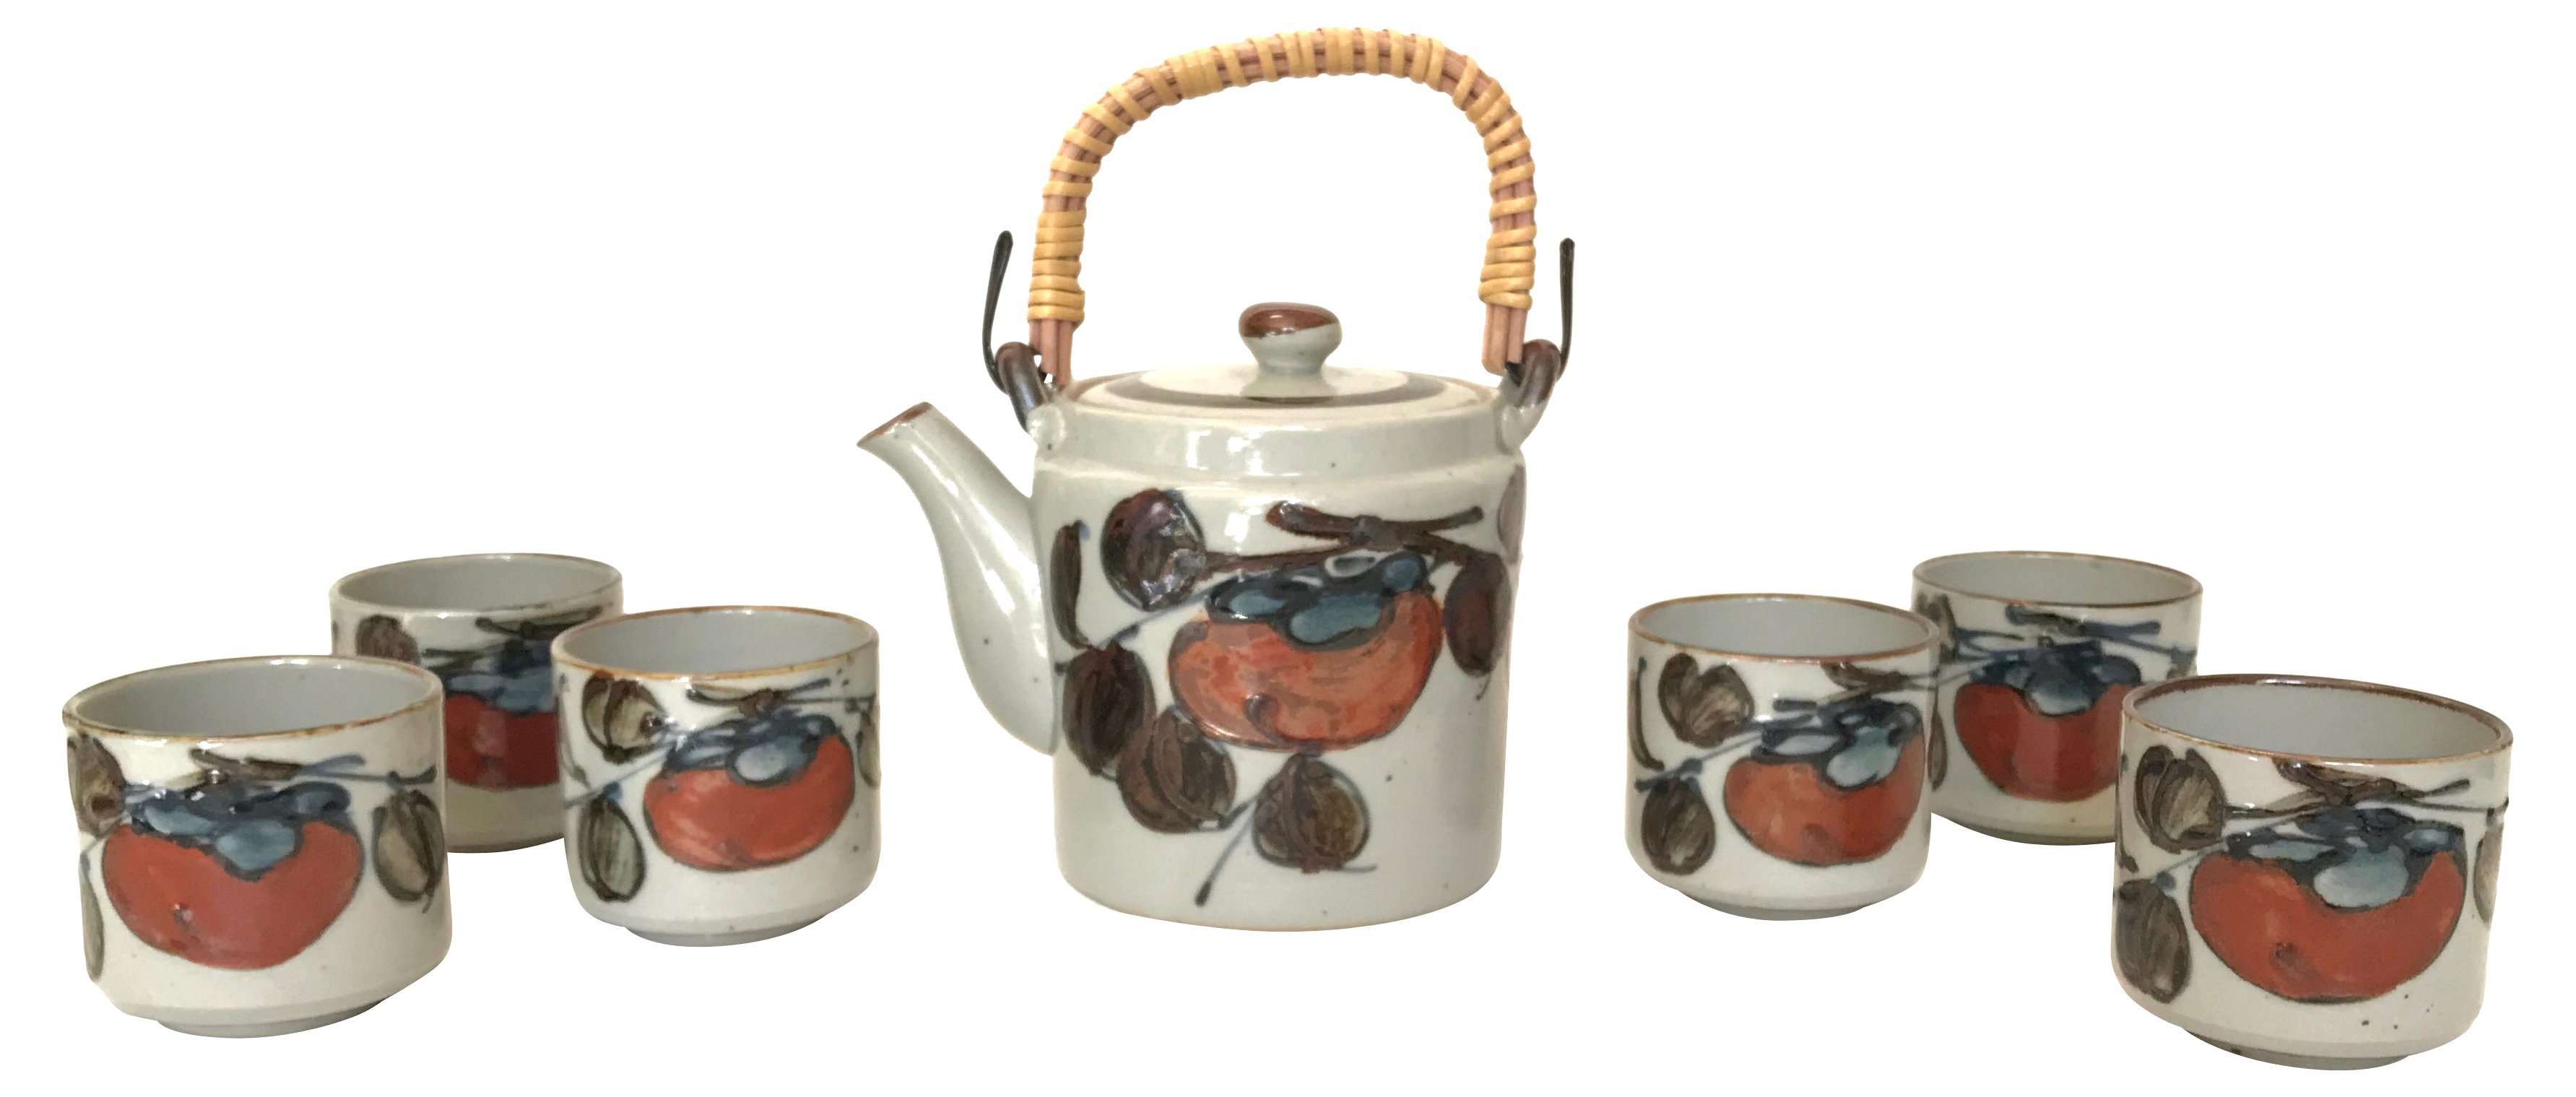 1970s Hand-Thrown Stoneware Tea Set, S/7~P77543375